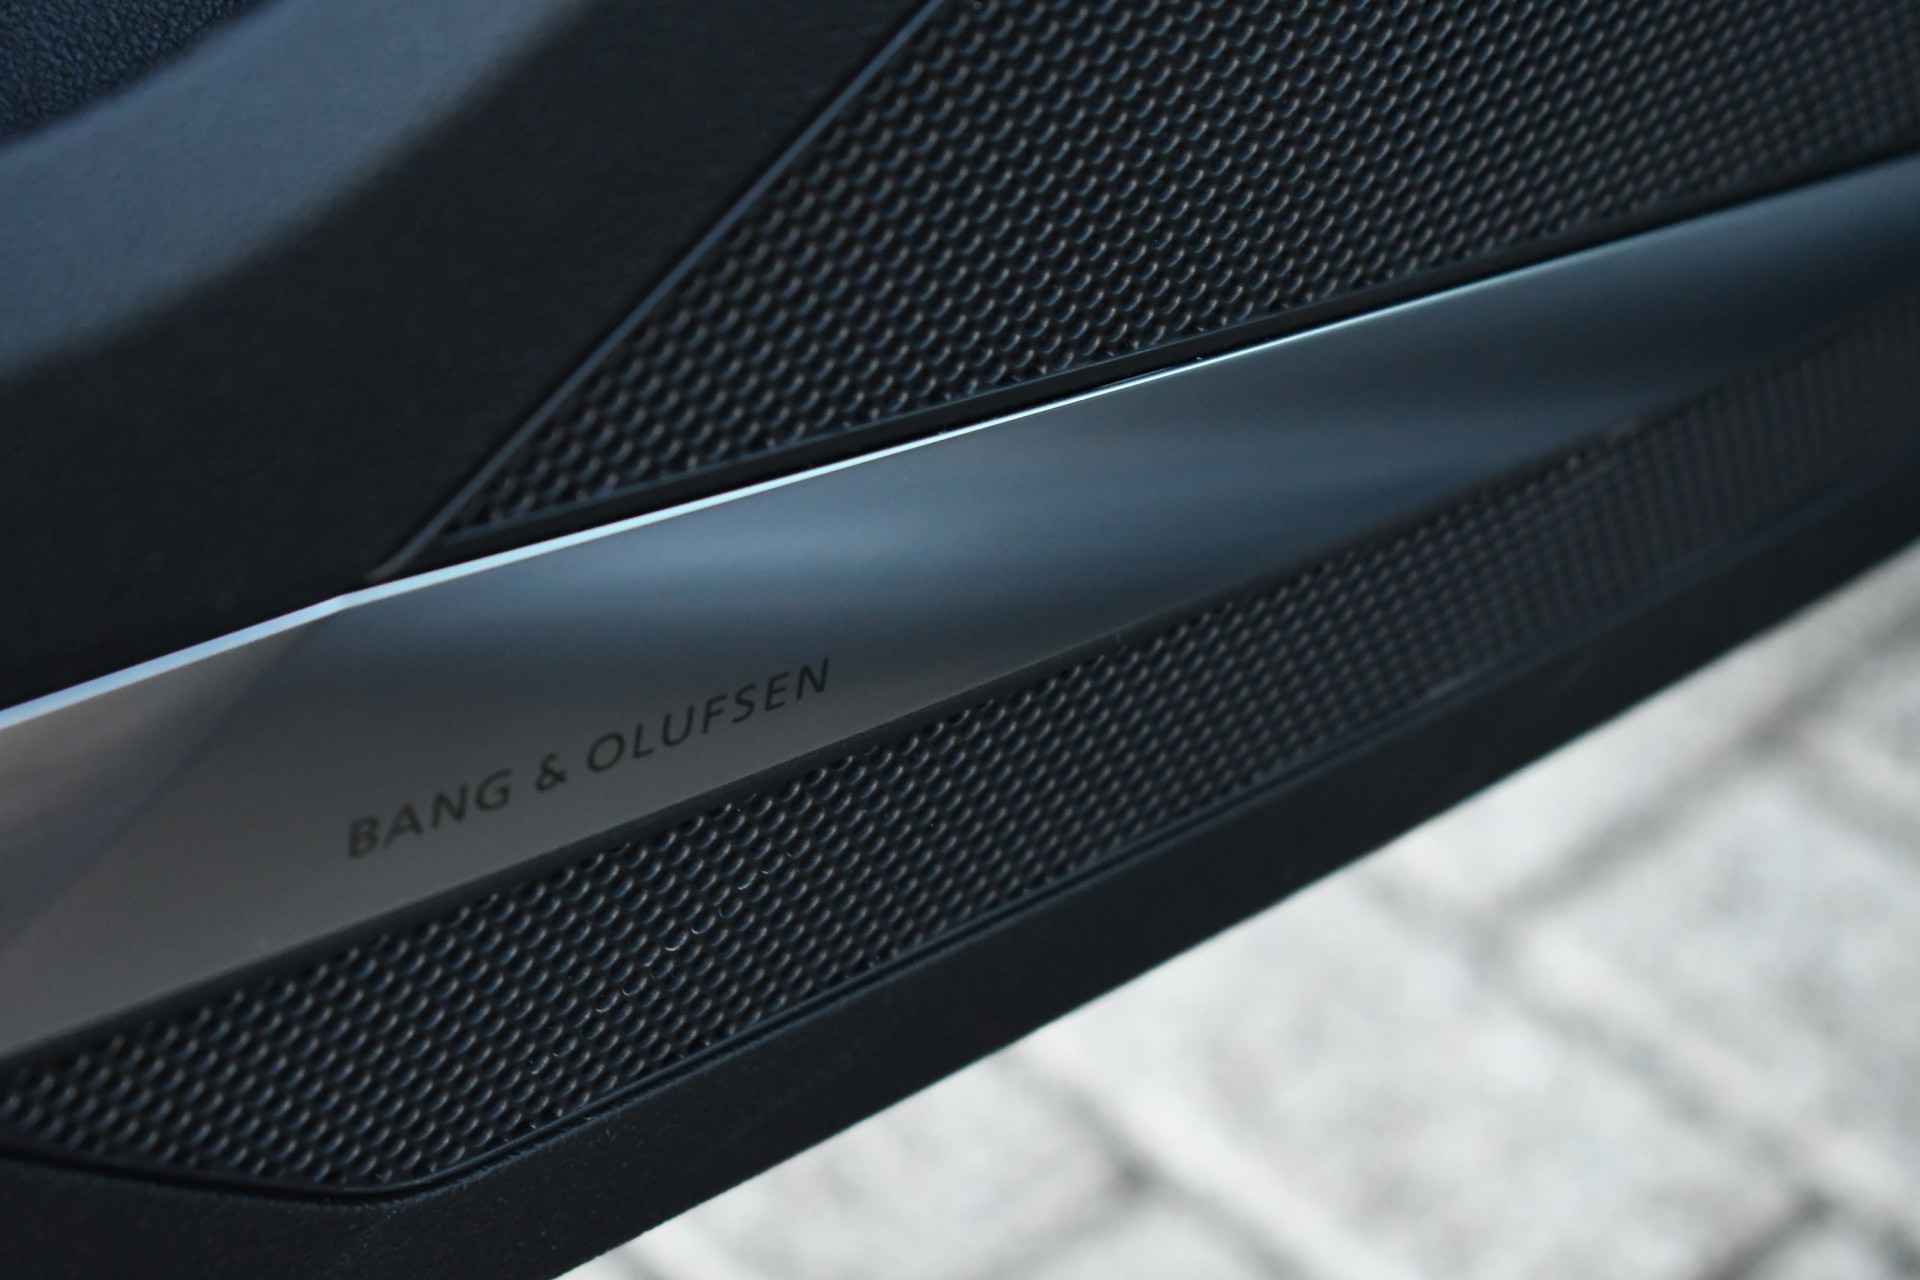 Bang & Olufsen audiosysteem